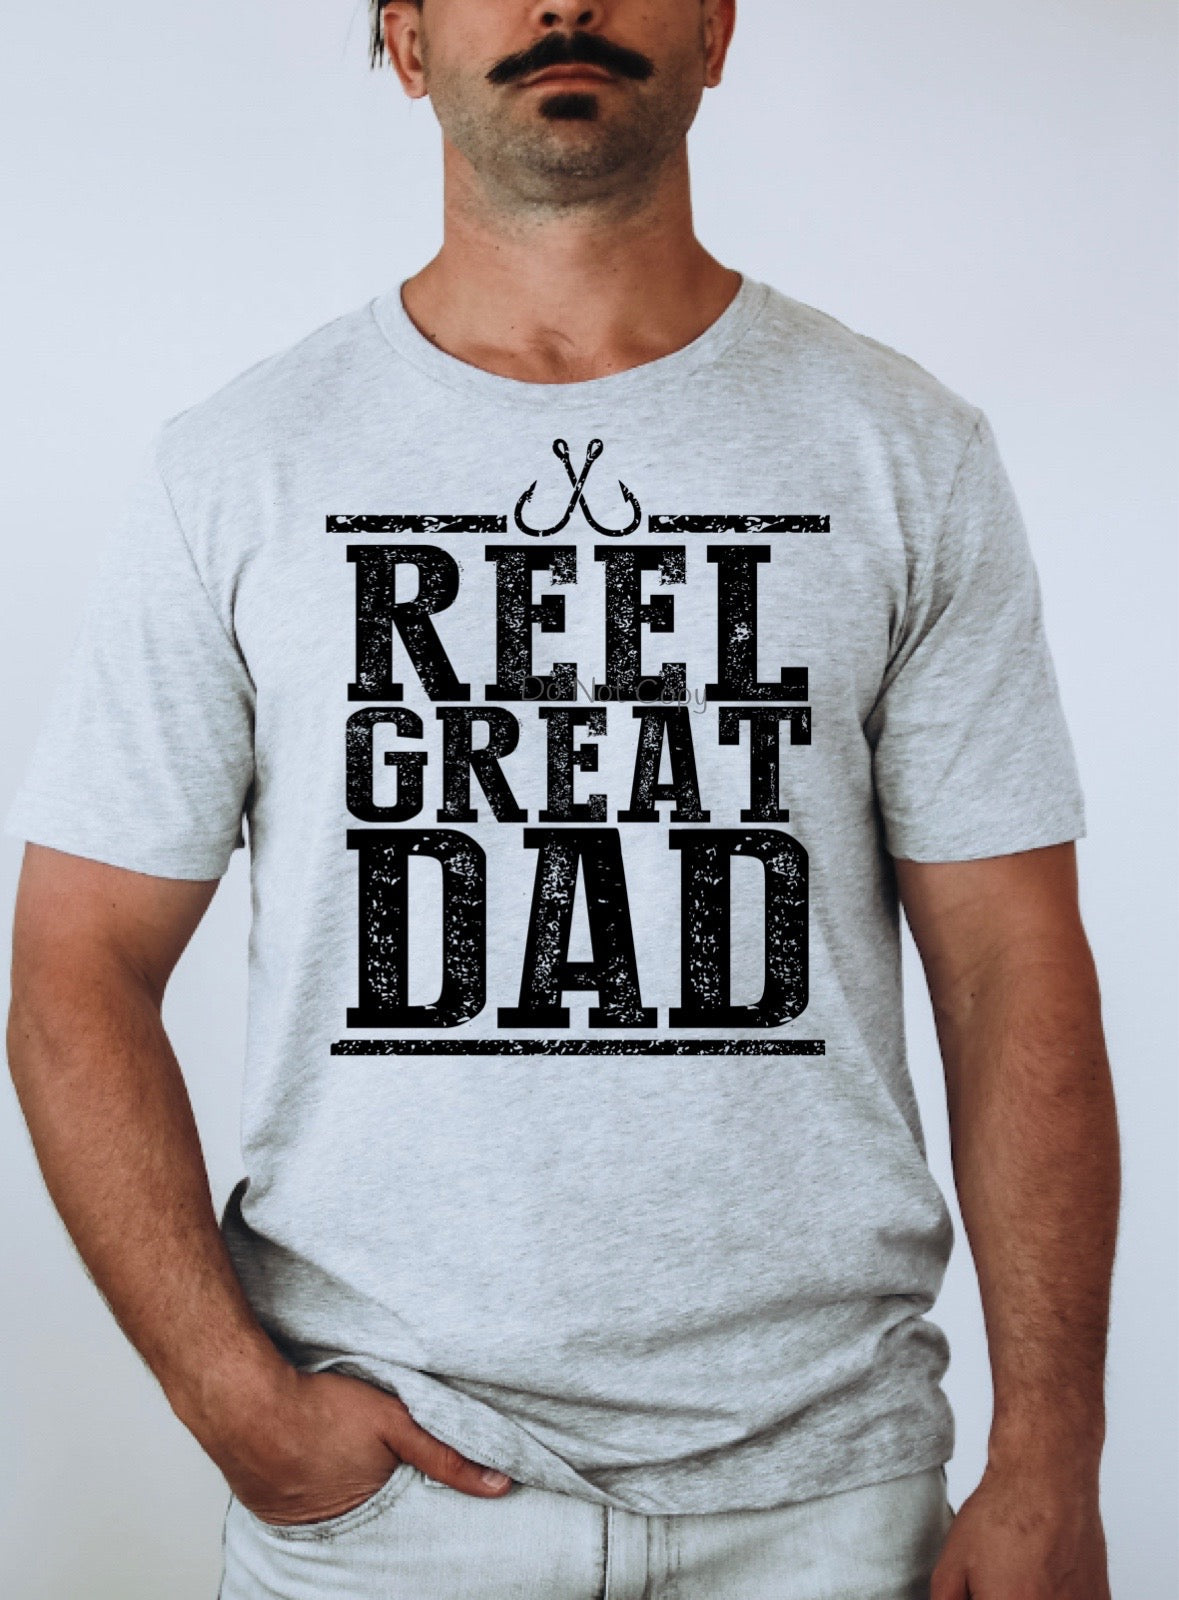 Reel great dad- DTF